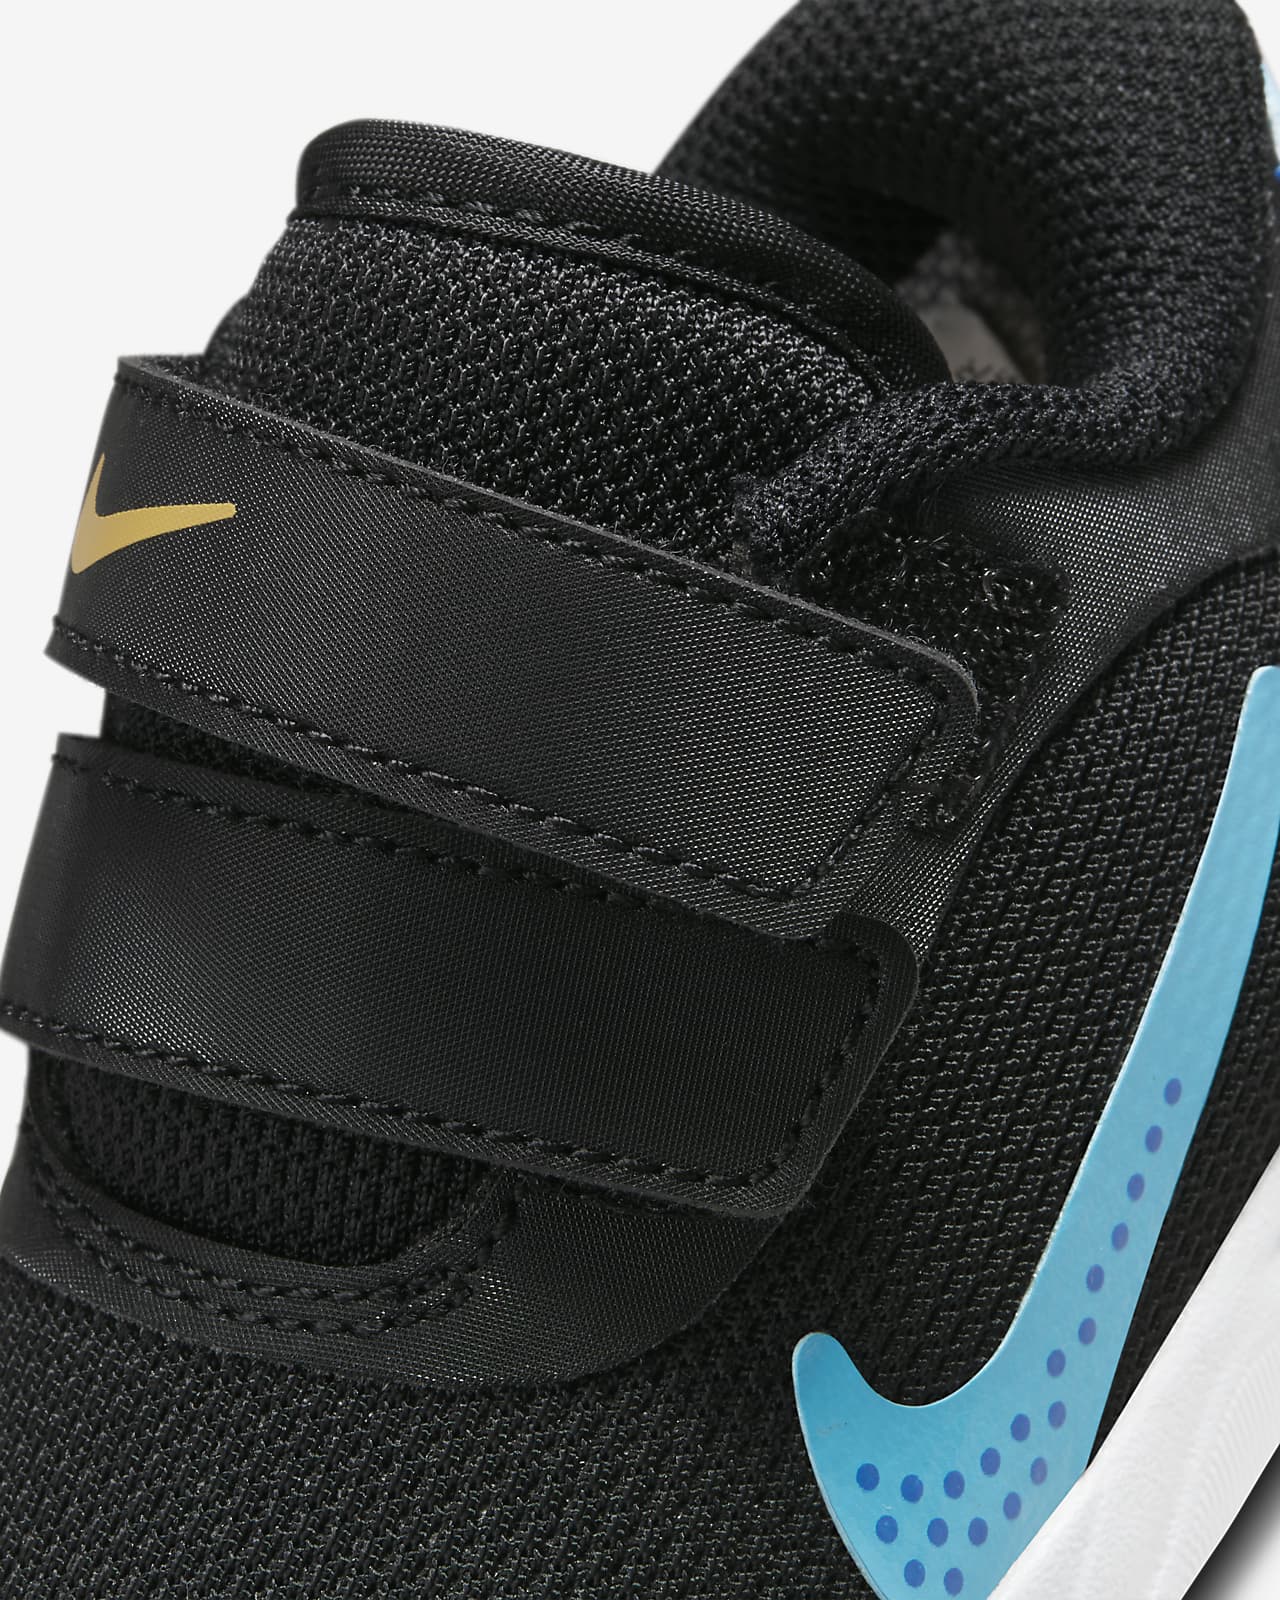 Nike Omni Baby/Toddler Shoes. ID Multi-Court Nike